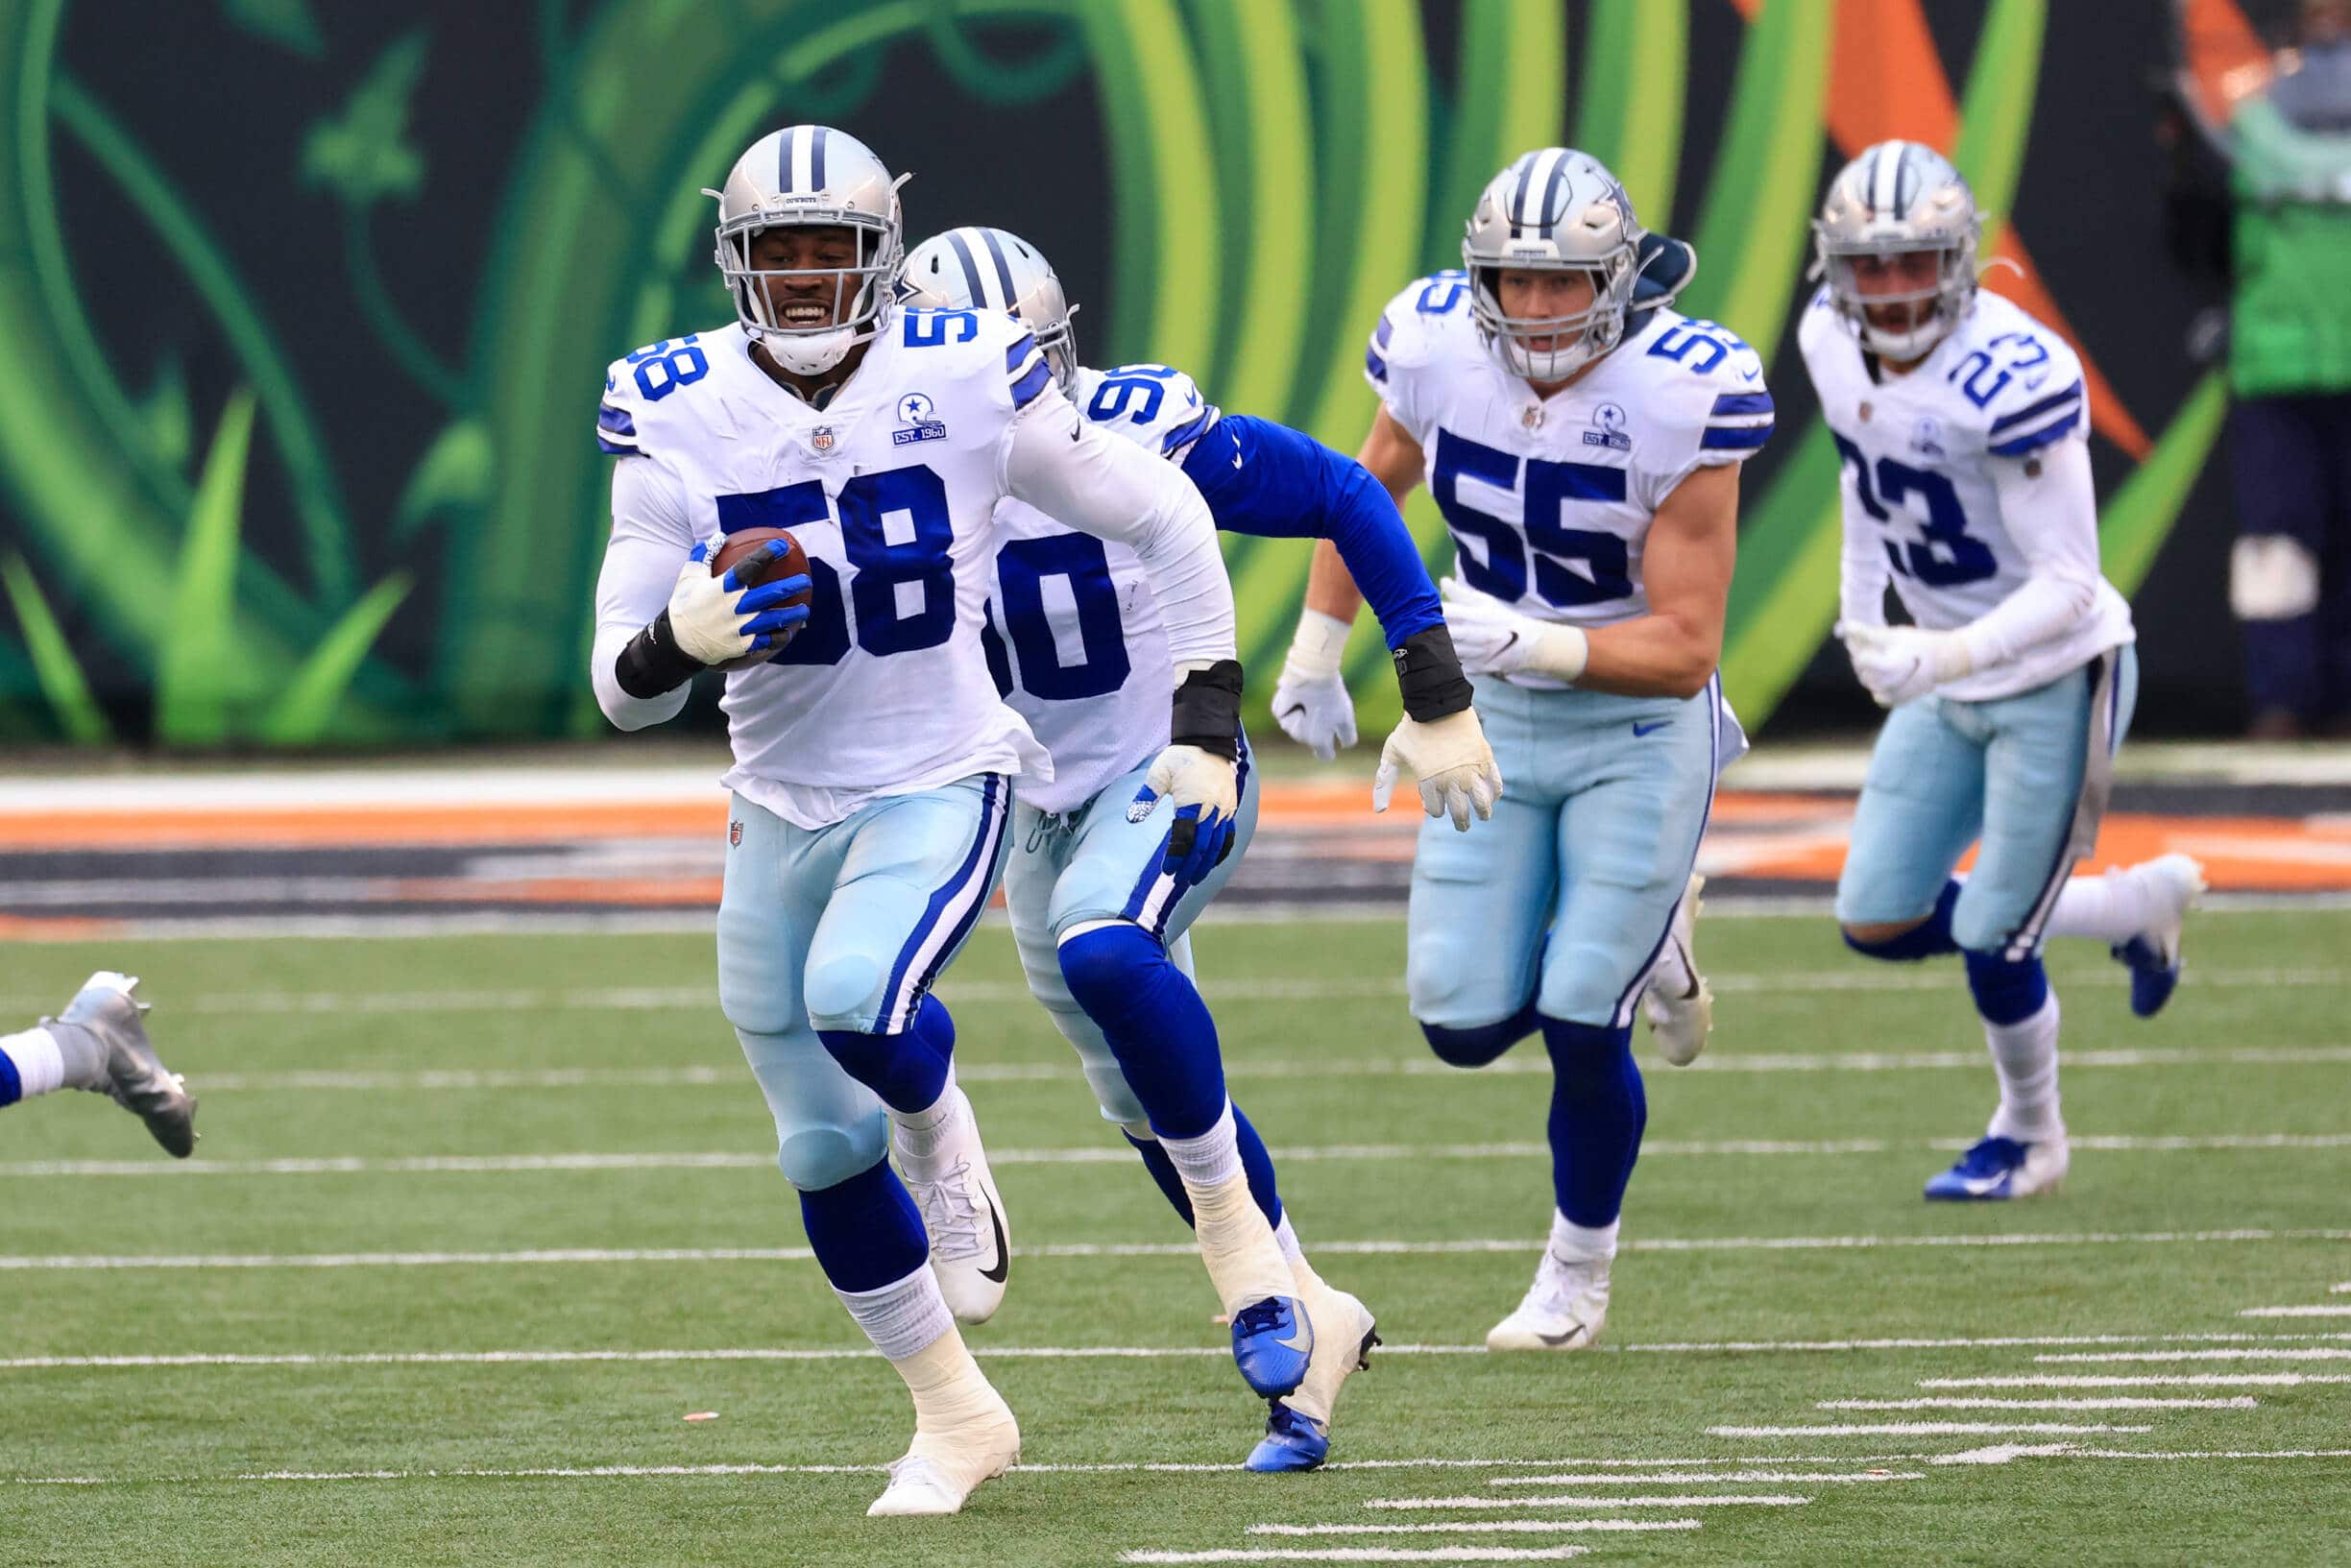 CINCINNATI, OH - DECEMBER 13: Dallas Cowboys defensive end Aldon Smith (58) grabs a fumble and scores a touchdown during